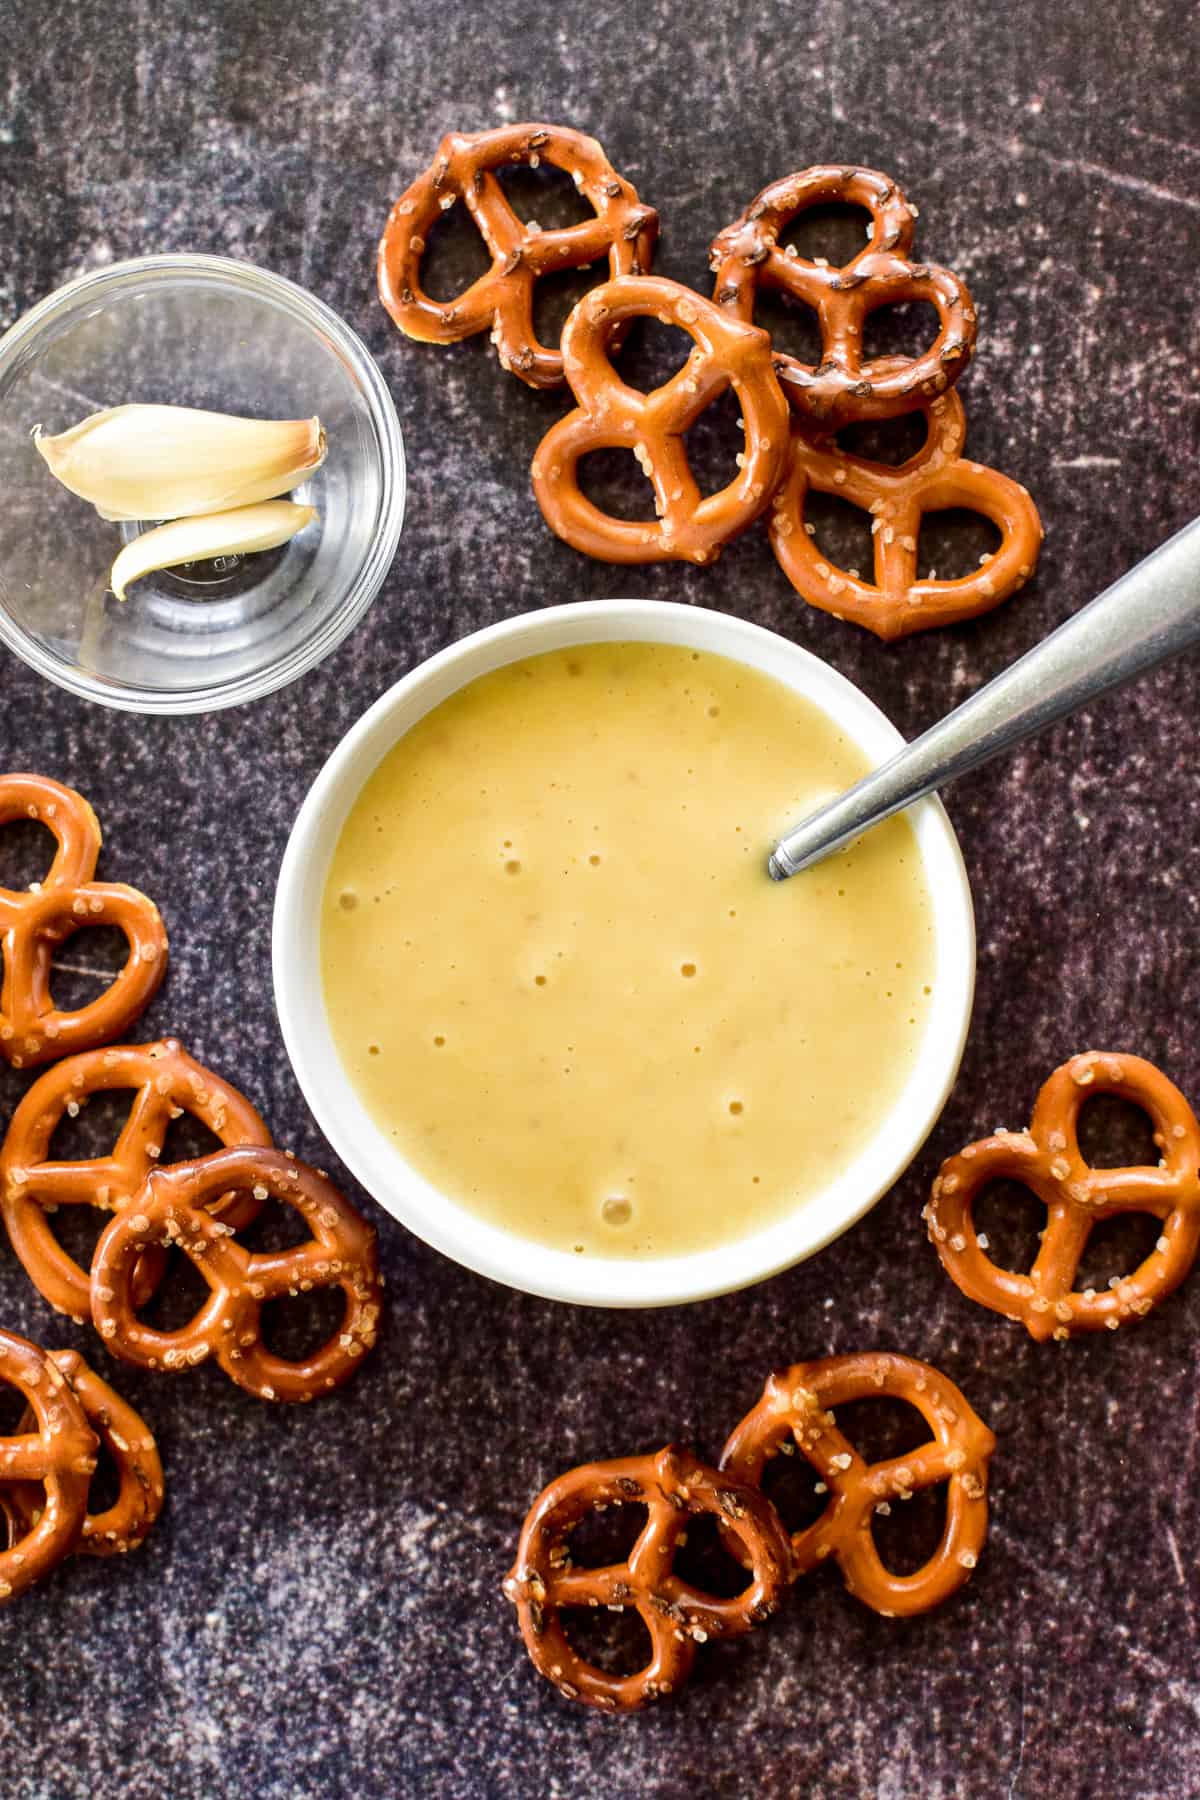 Garlic Honey Mustard in a bowl with pretzels